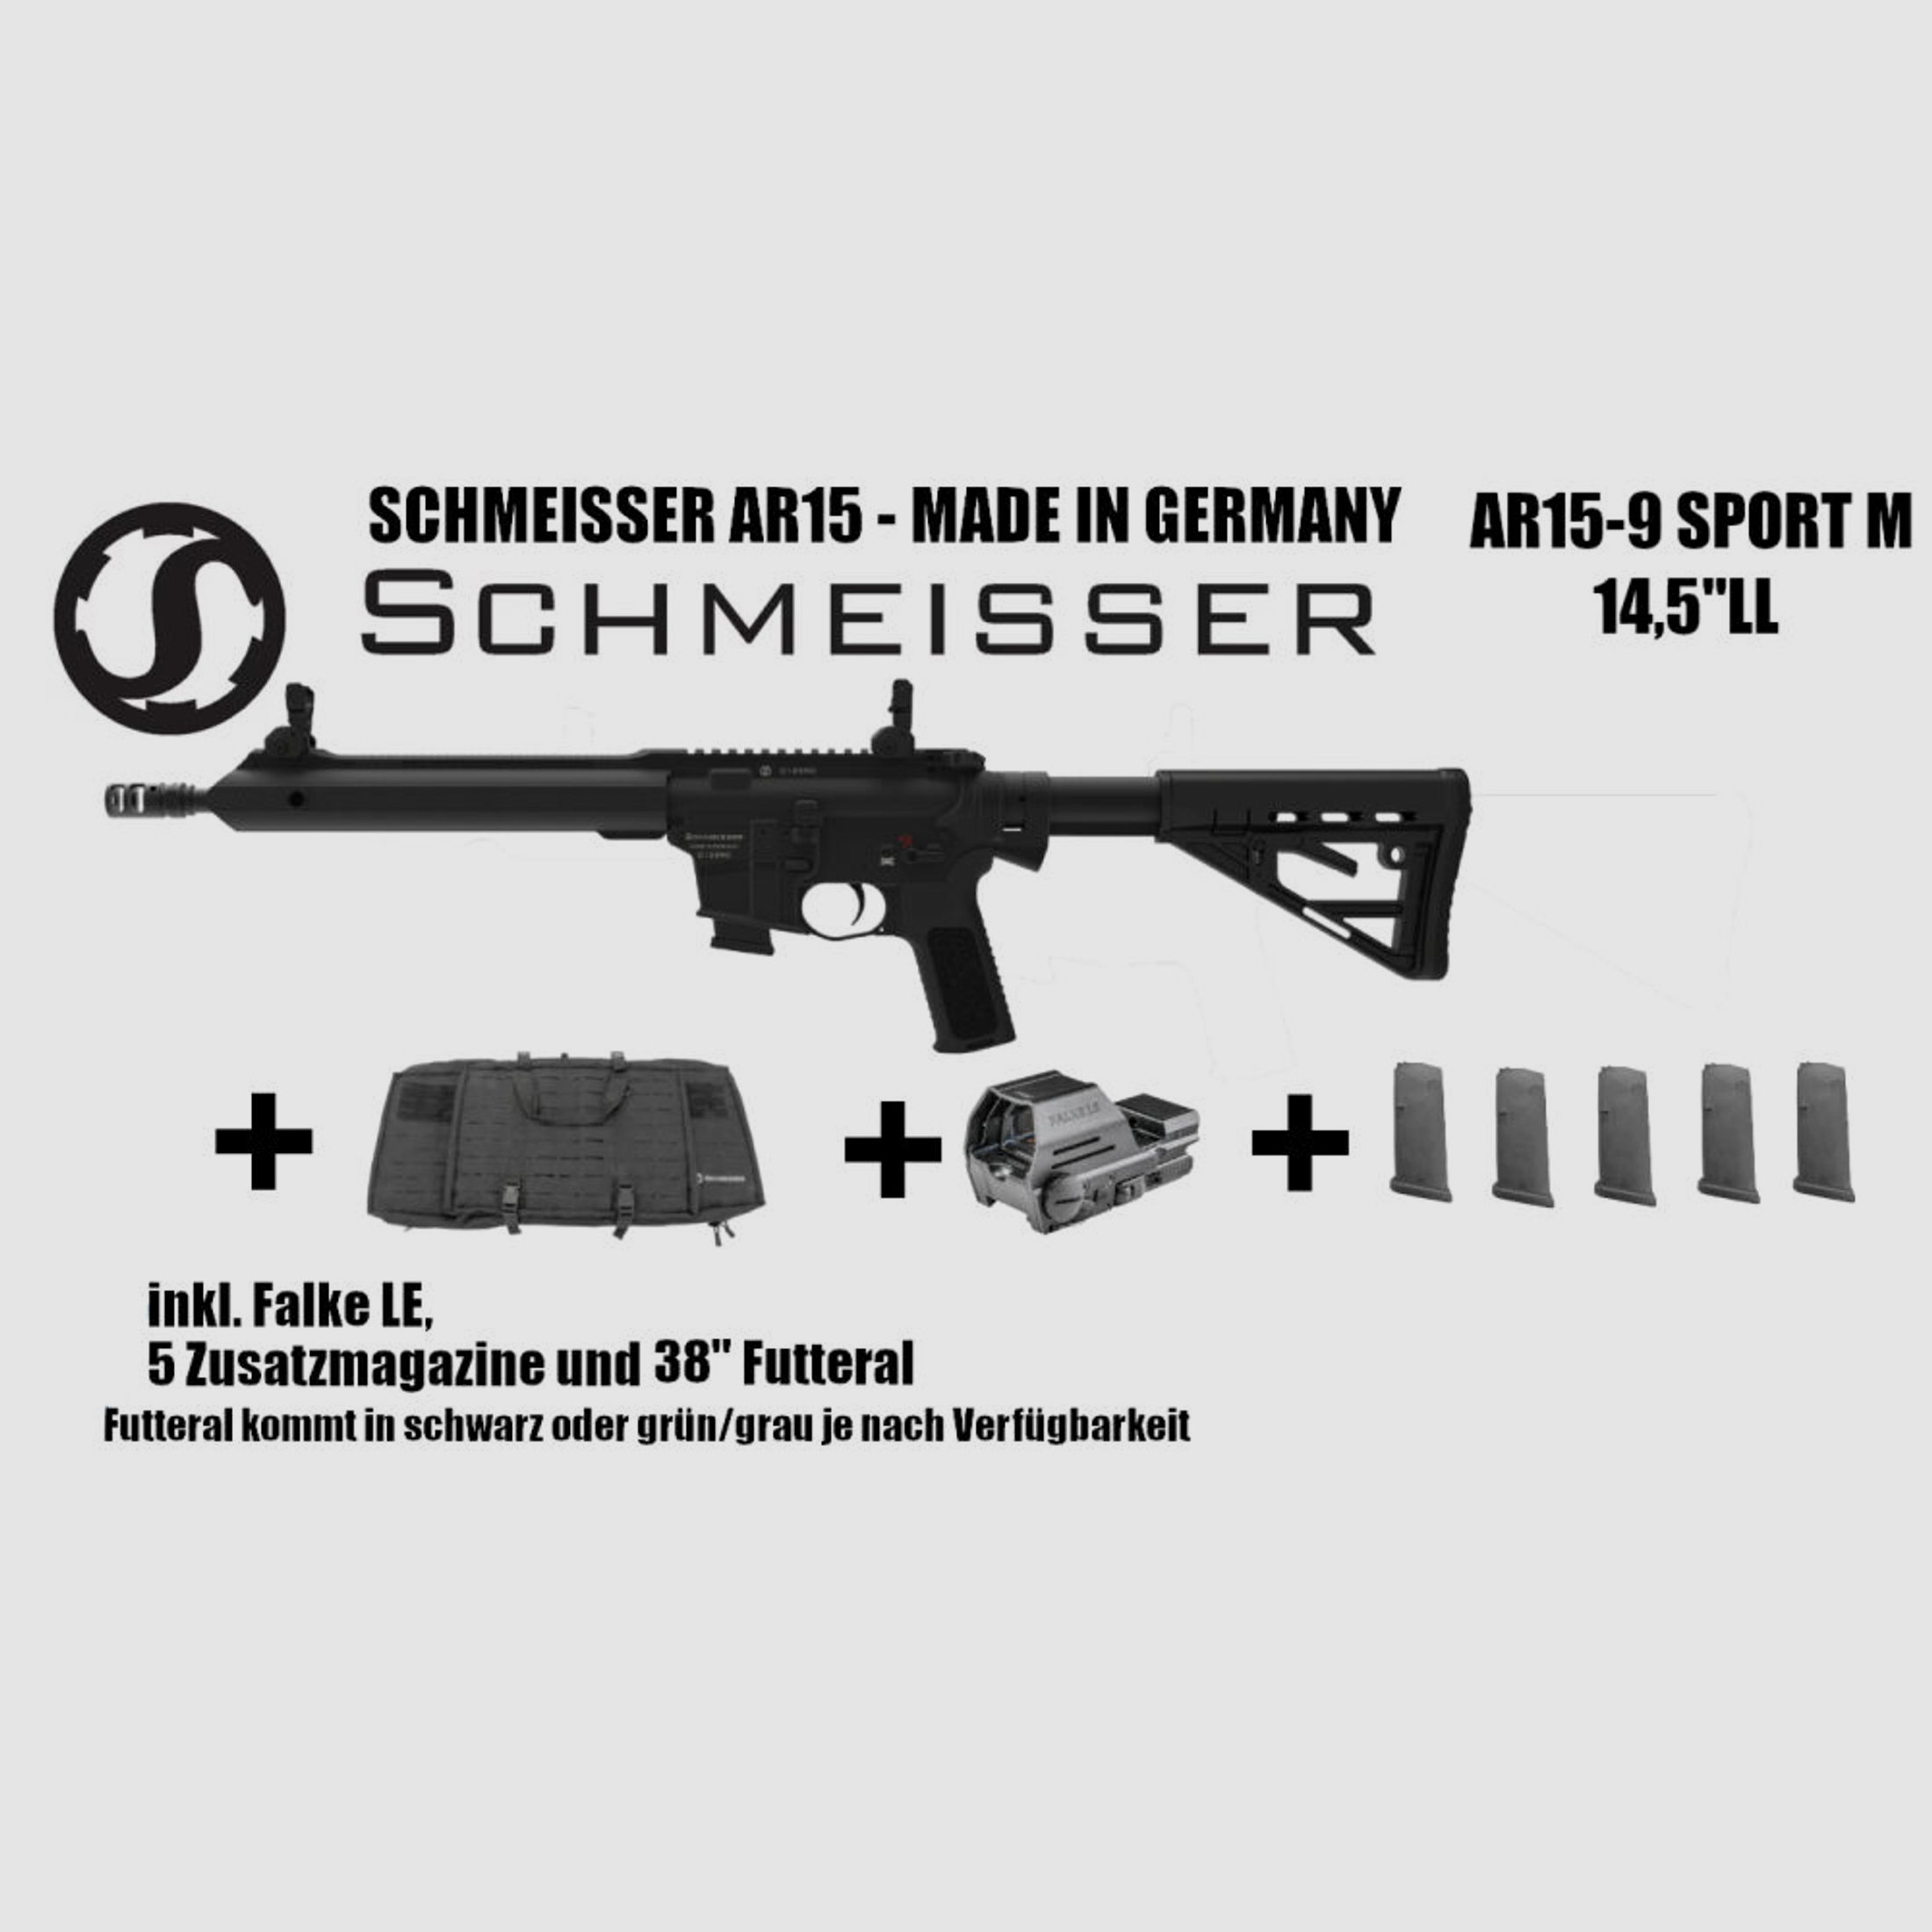 Schmeisser AR15-9 Sport M 14,5" LL 9mm Luger Büchse + Falke LE	 + 5 Magazine + Futteral UVPE: 3008€ - Frühjahrskracher